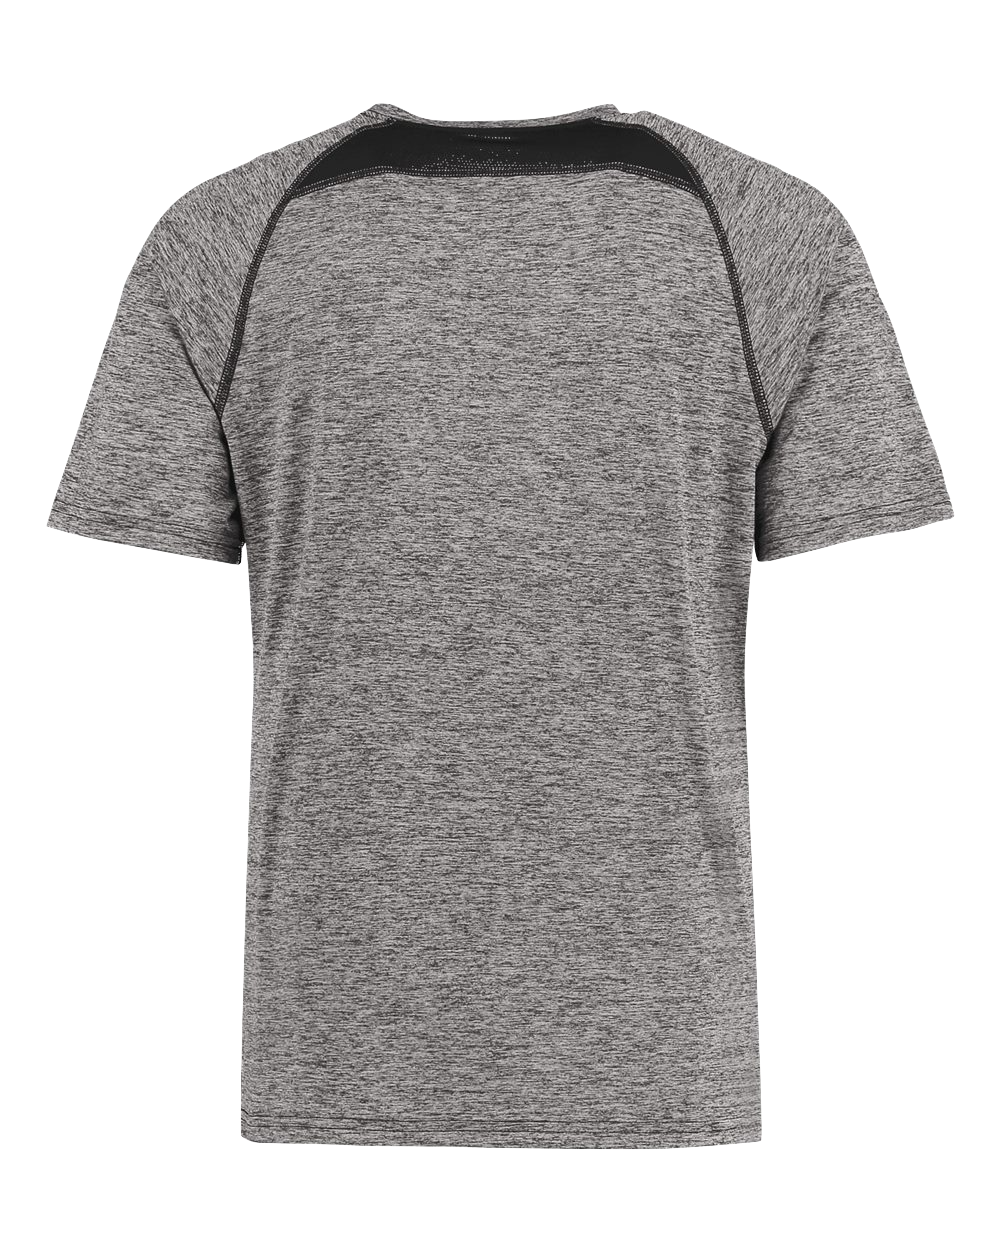 PAW PRINT Poly/Elastane High Performance T-Shirt with UPF 50+